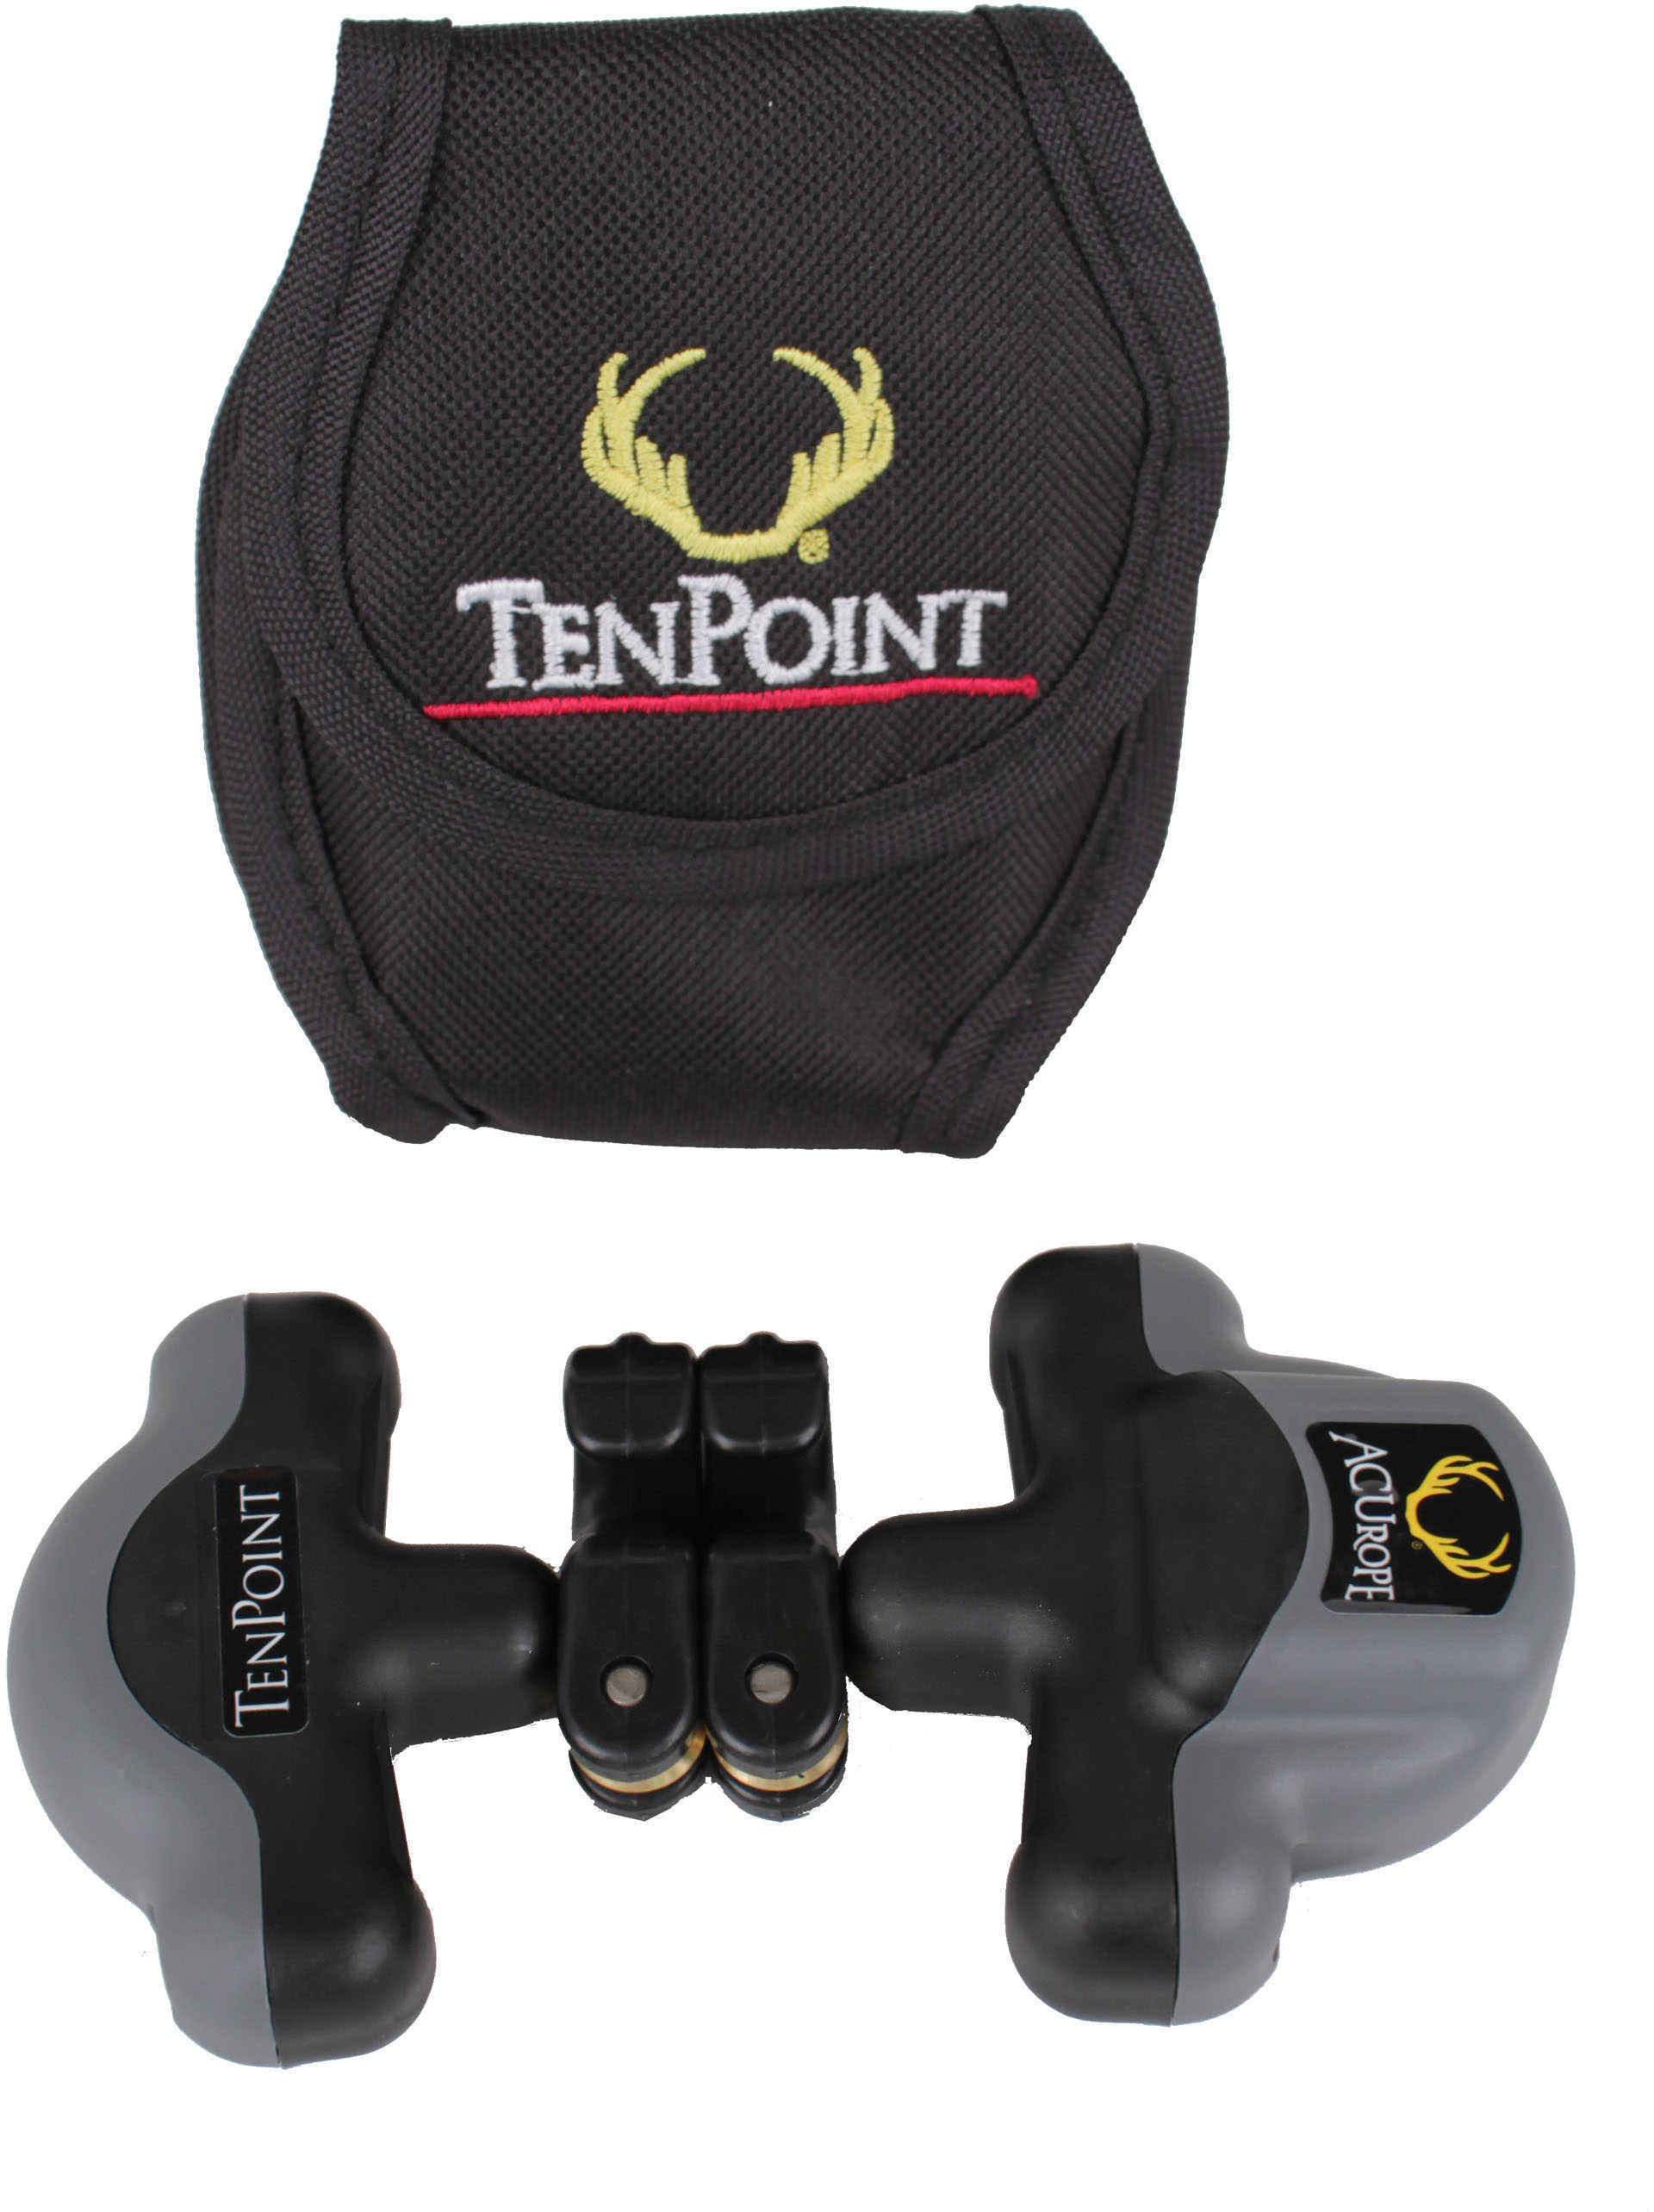 TENPOINT ACU-Rope W/ Case Black